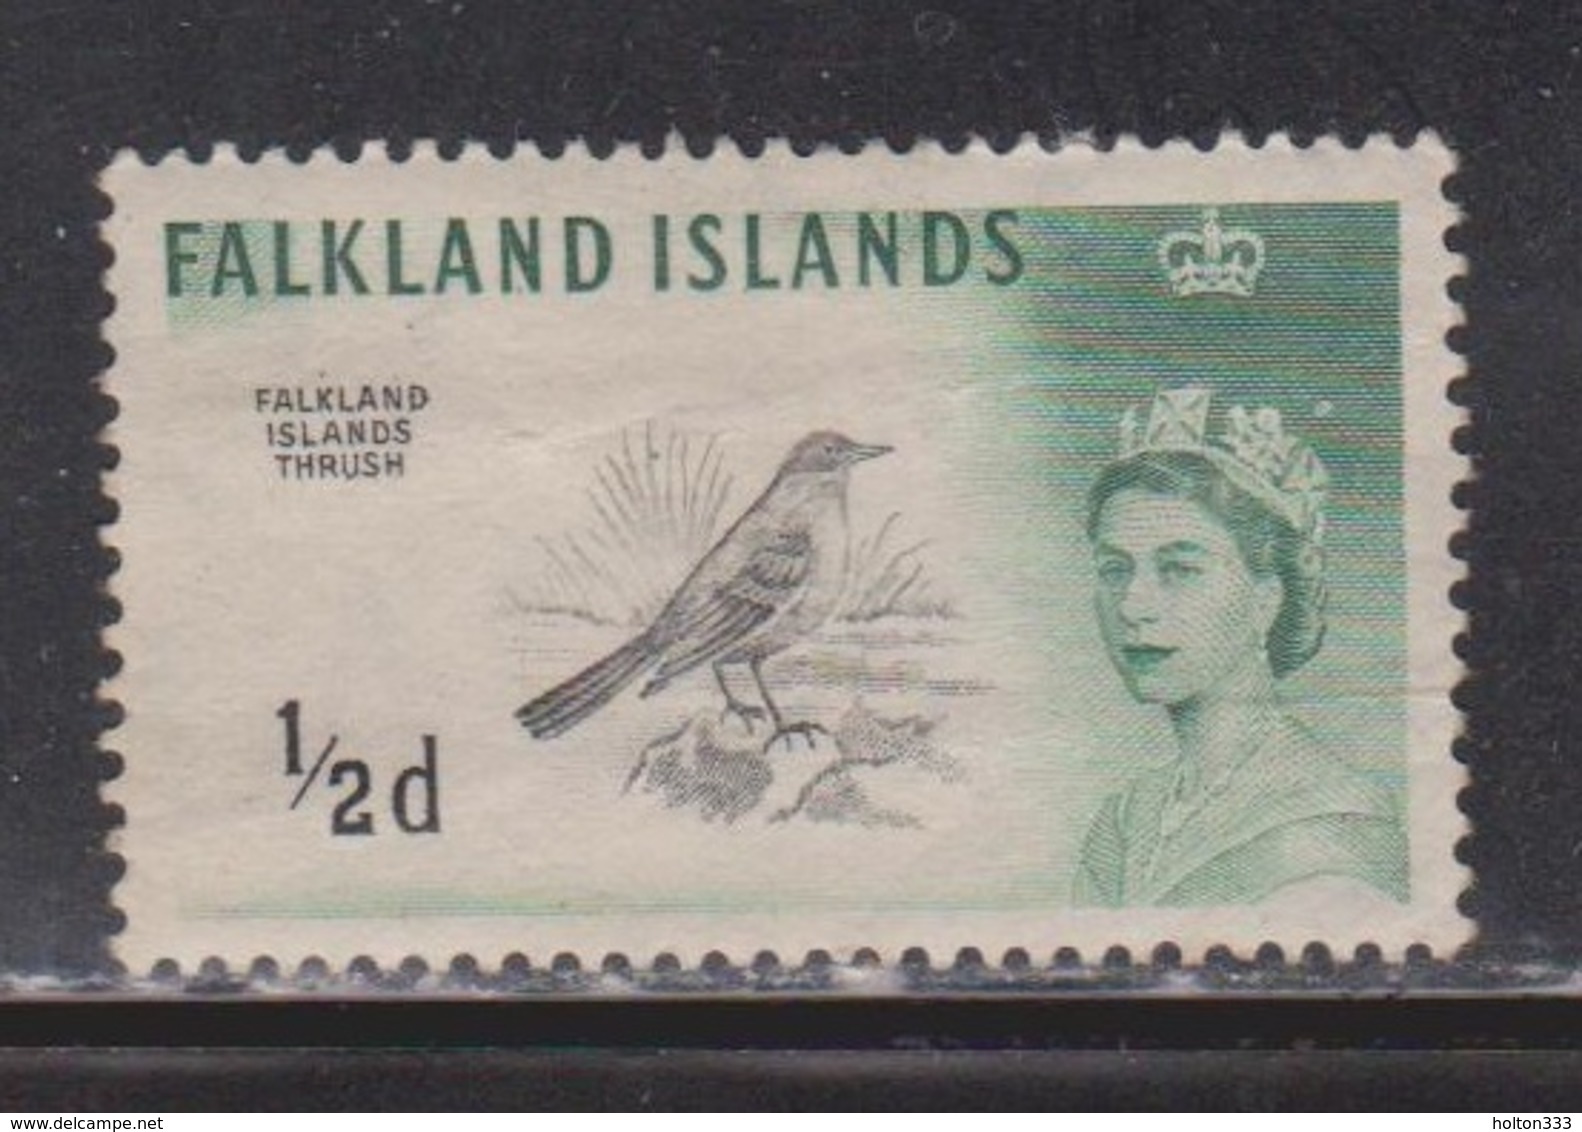 FALKLAND ISLANDS Scott # 128 MH - QEII & Falkland Islands Thrush - Bird - Falkland Islands